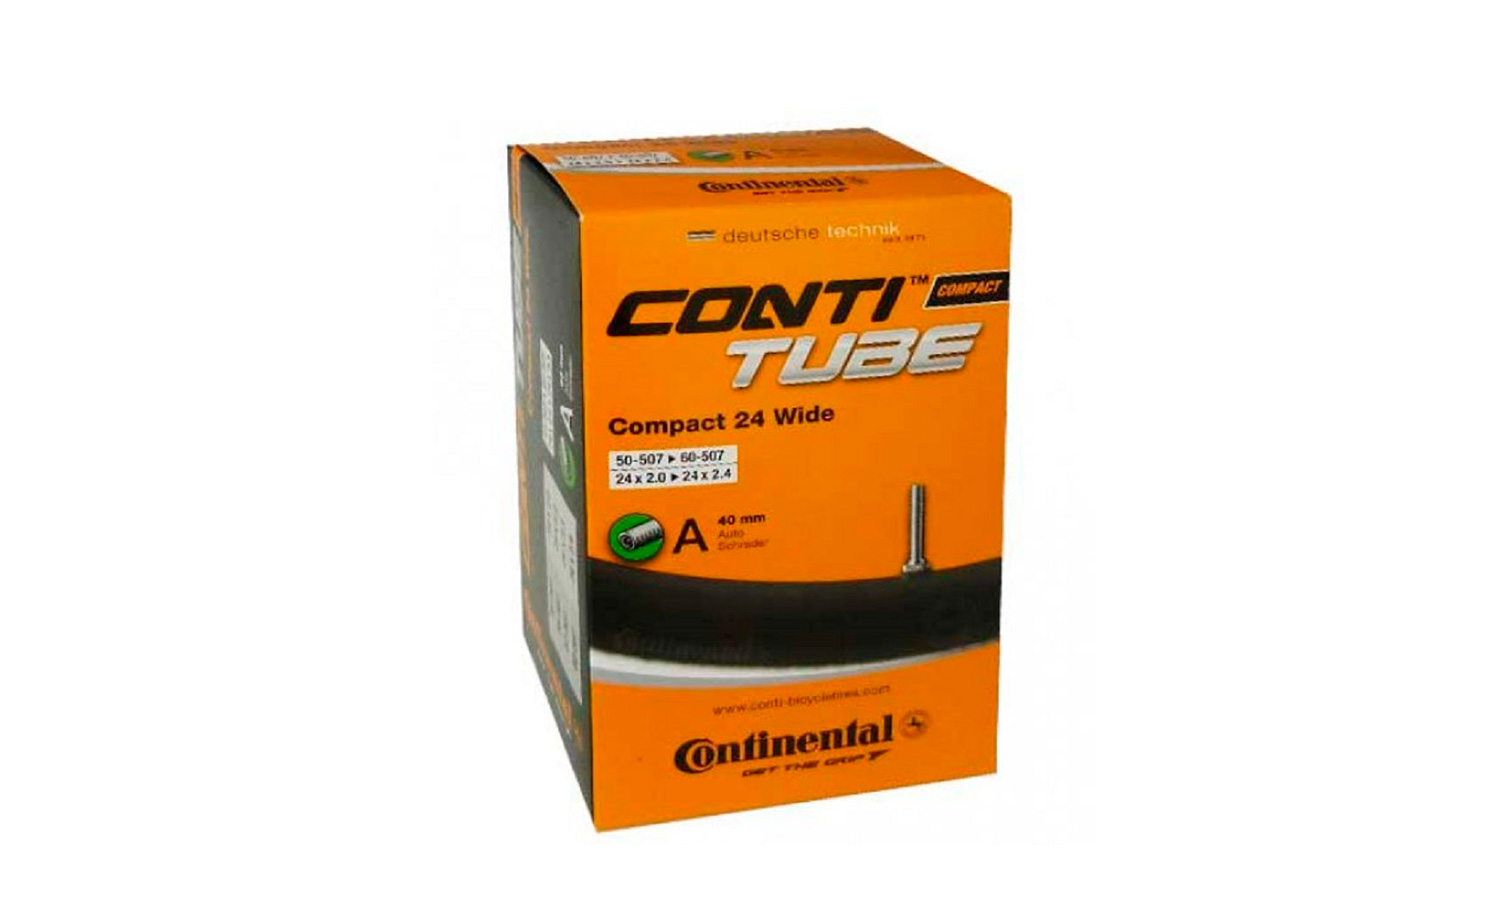 Фотография Камера Continental Compact 24"x2.0-2.4, 50-507 -> 60-507, AV40 мм